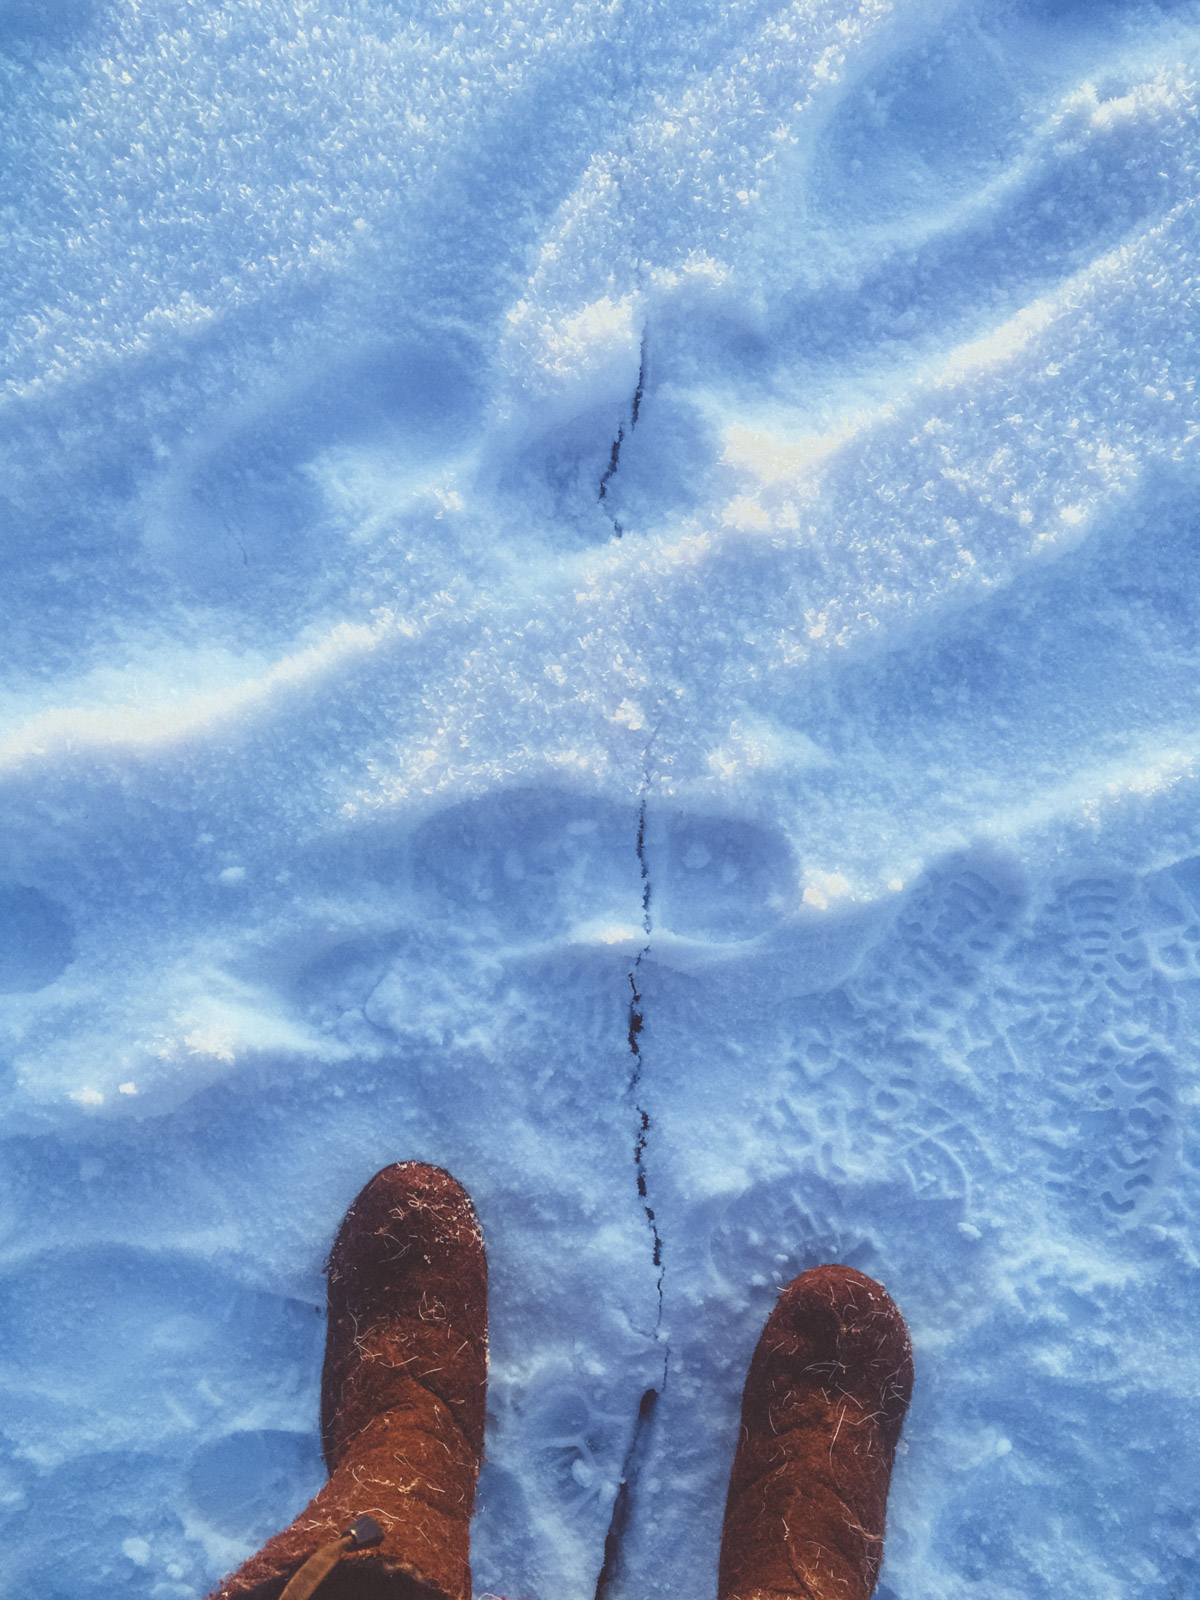 felt boots on snow and ice